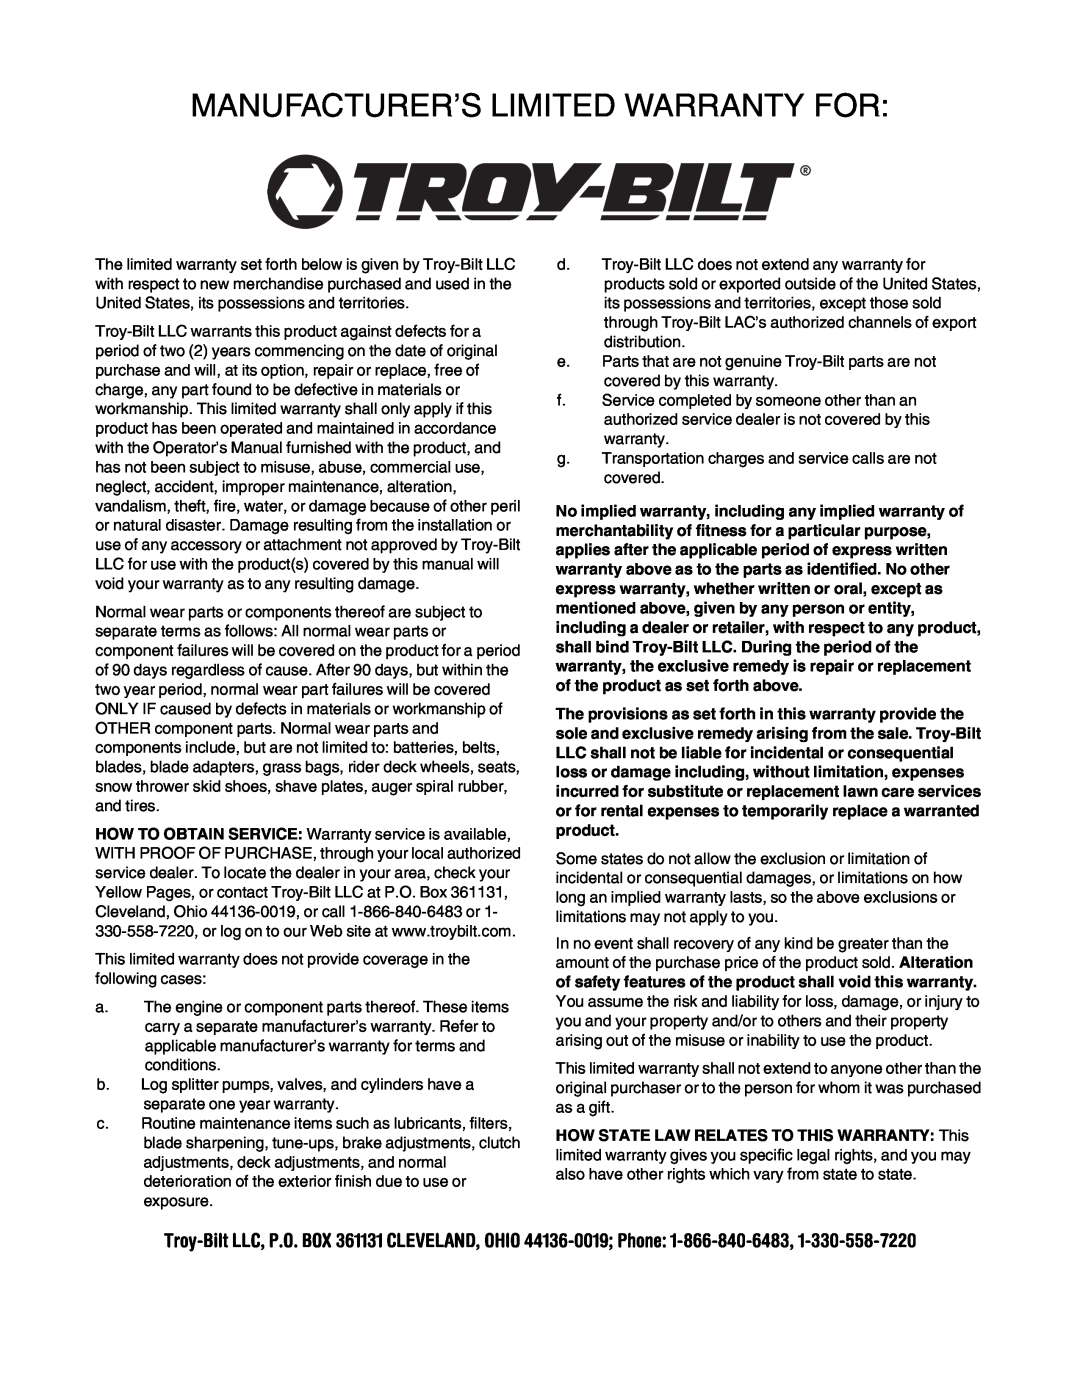 Troy-Bilt TRU CUT 100 manual Manufacturer’S Limited Warranty For 